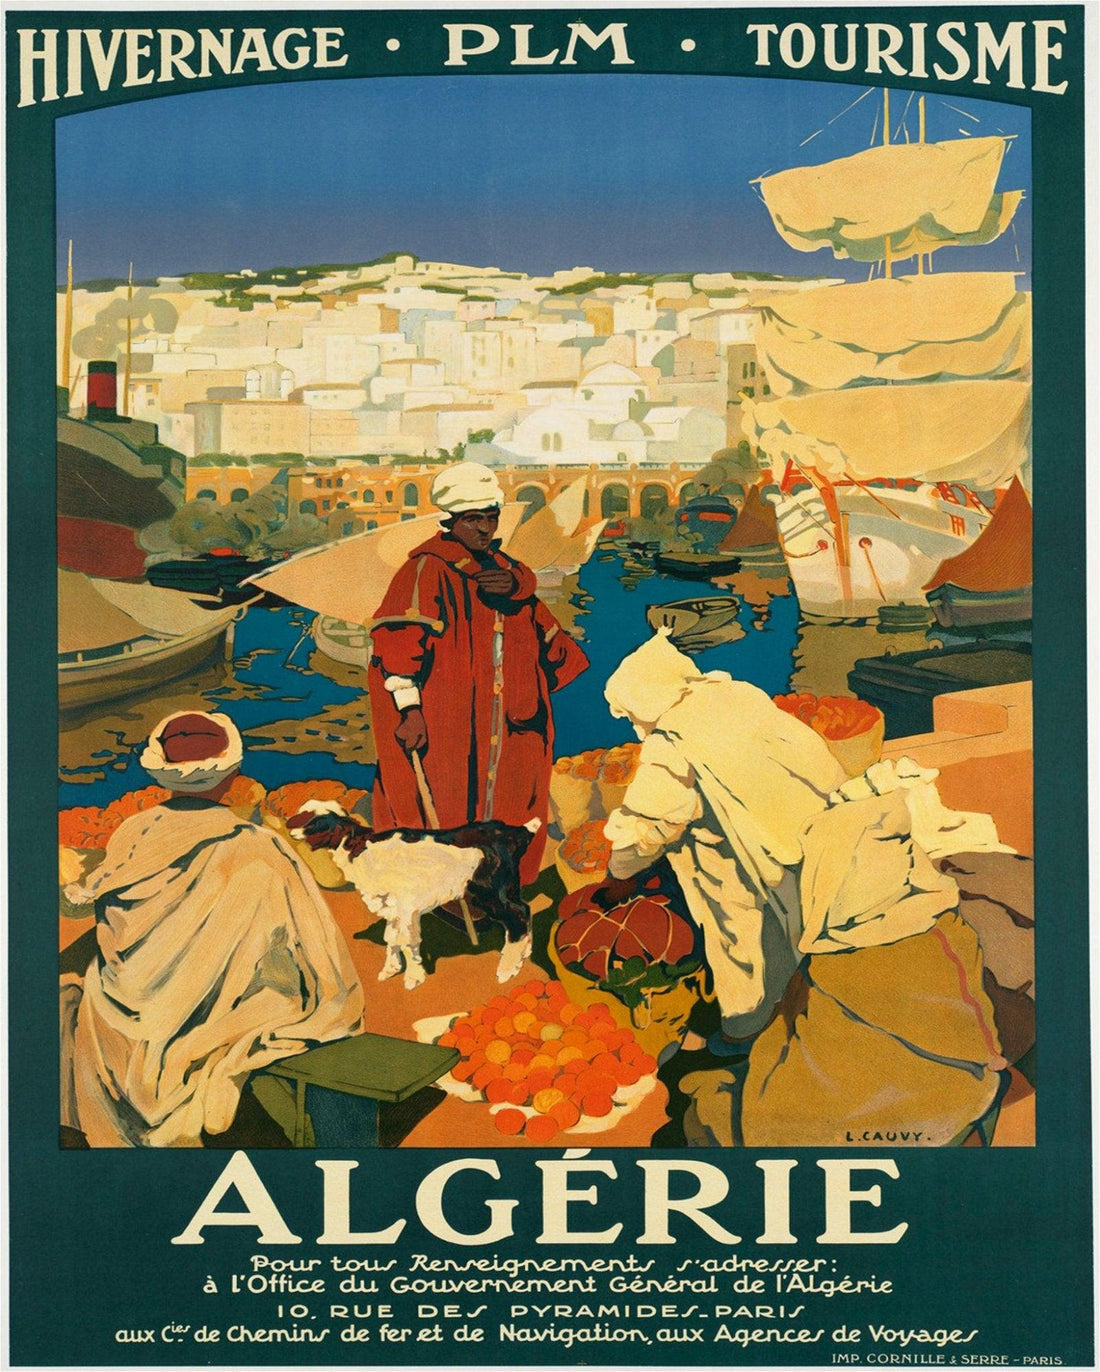 Vintage Metal Sign - Retro Advertising - Algerie Tourism - £27.99 - Retro Advertising 